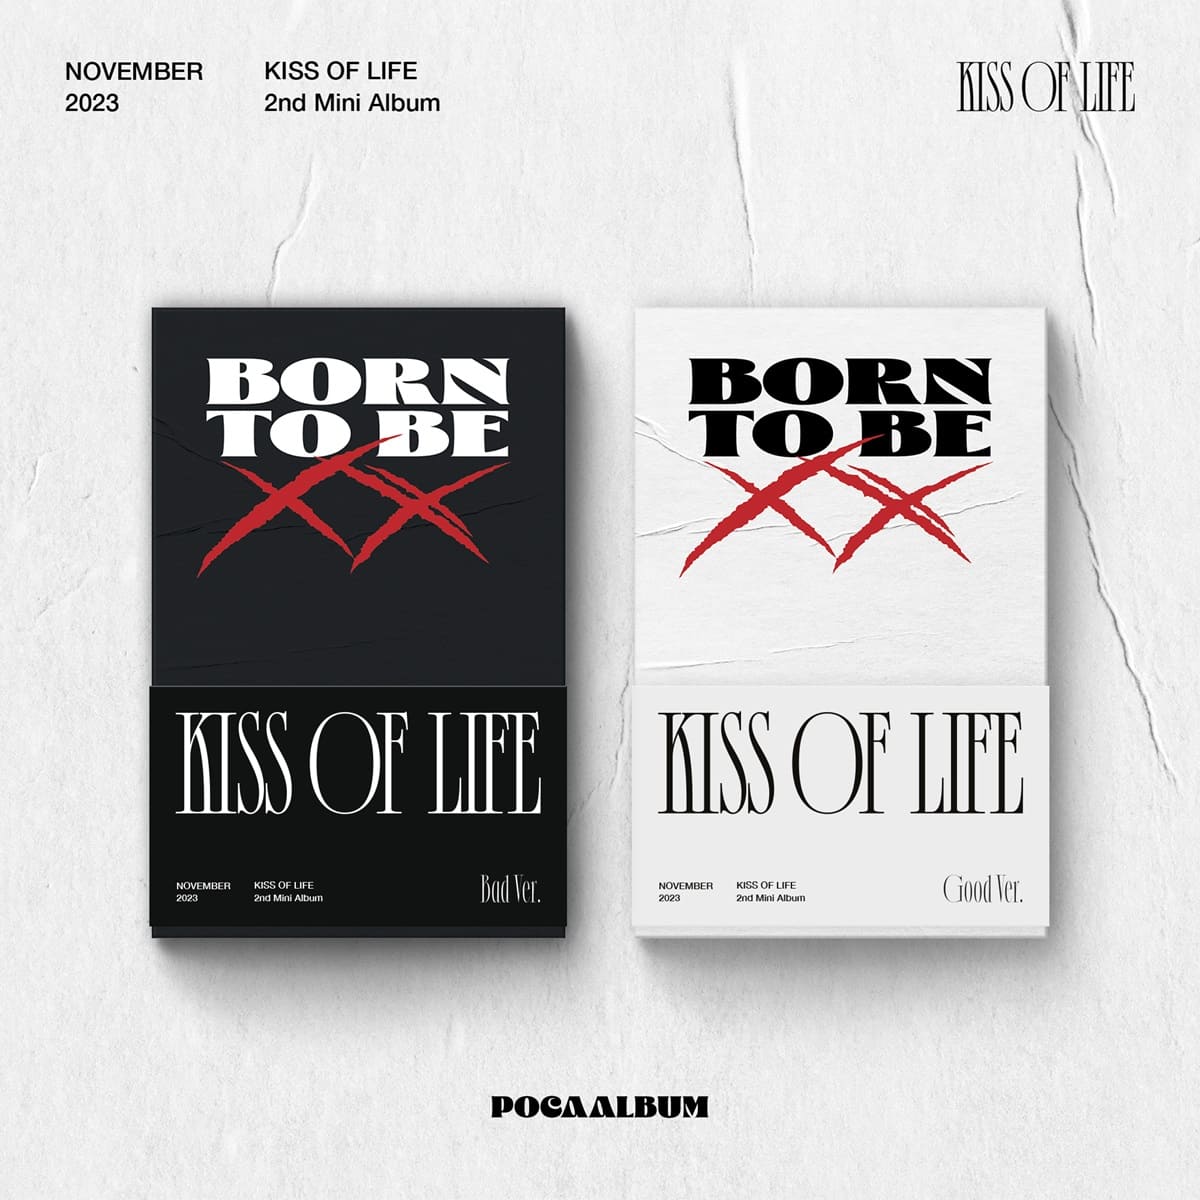 KISS OF LIFE 2nd Mini Album Born to be XX (PocaAlbum Version)